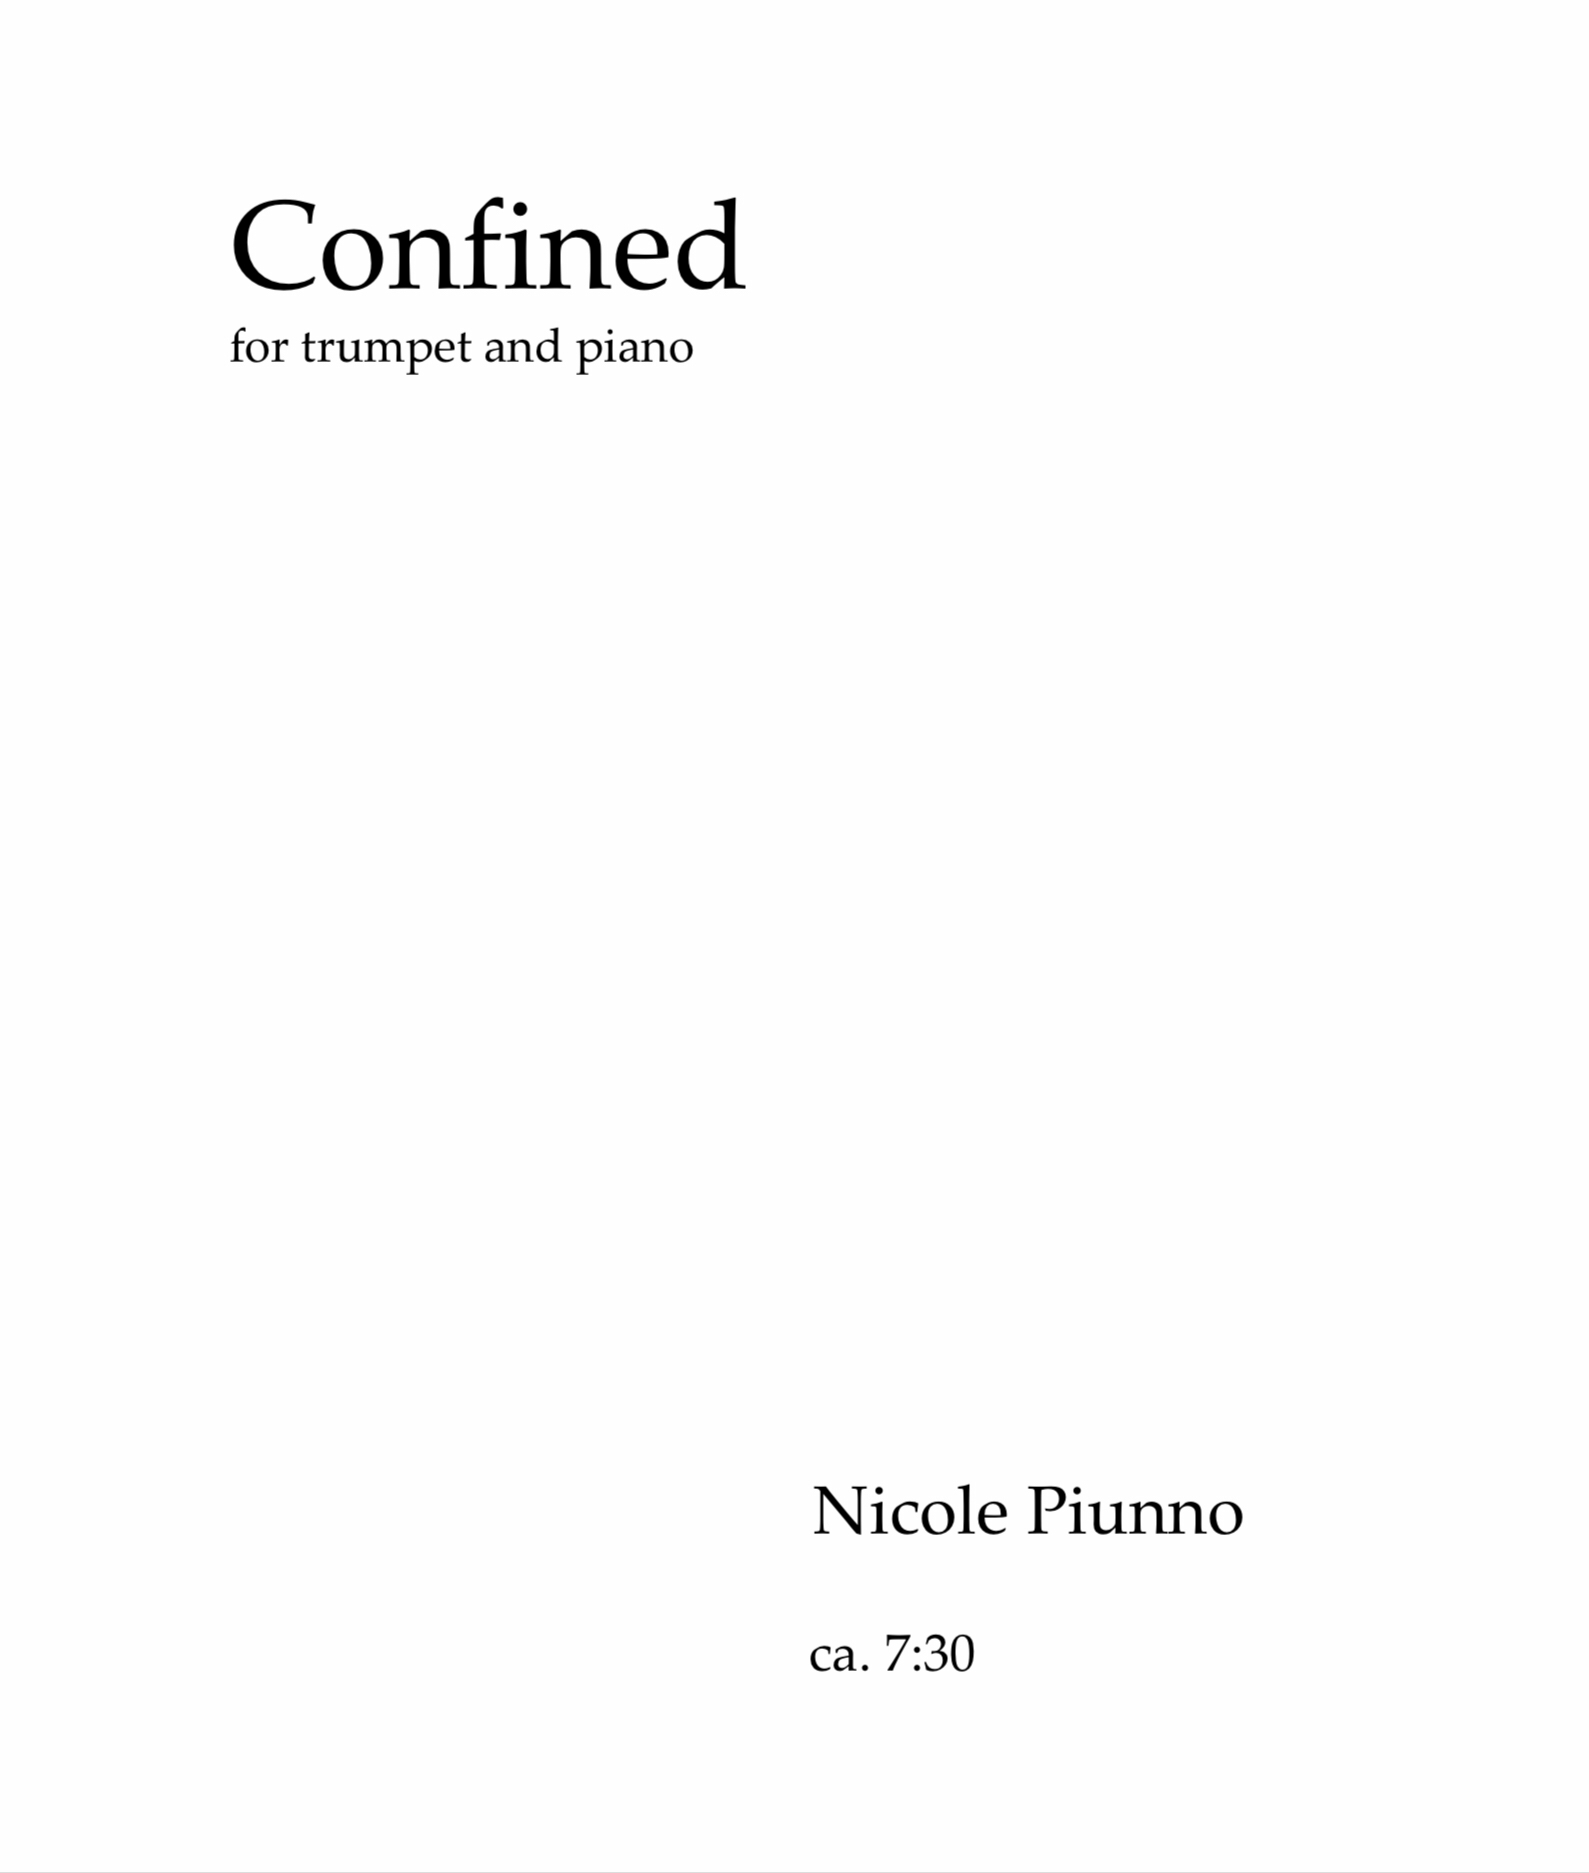 Confined by Nicole Piunno